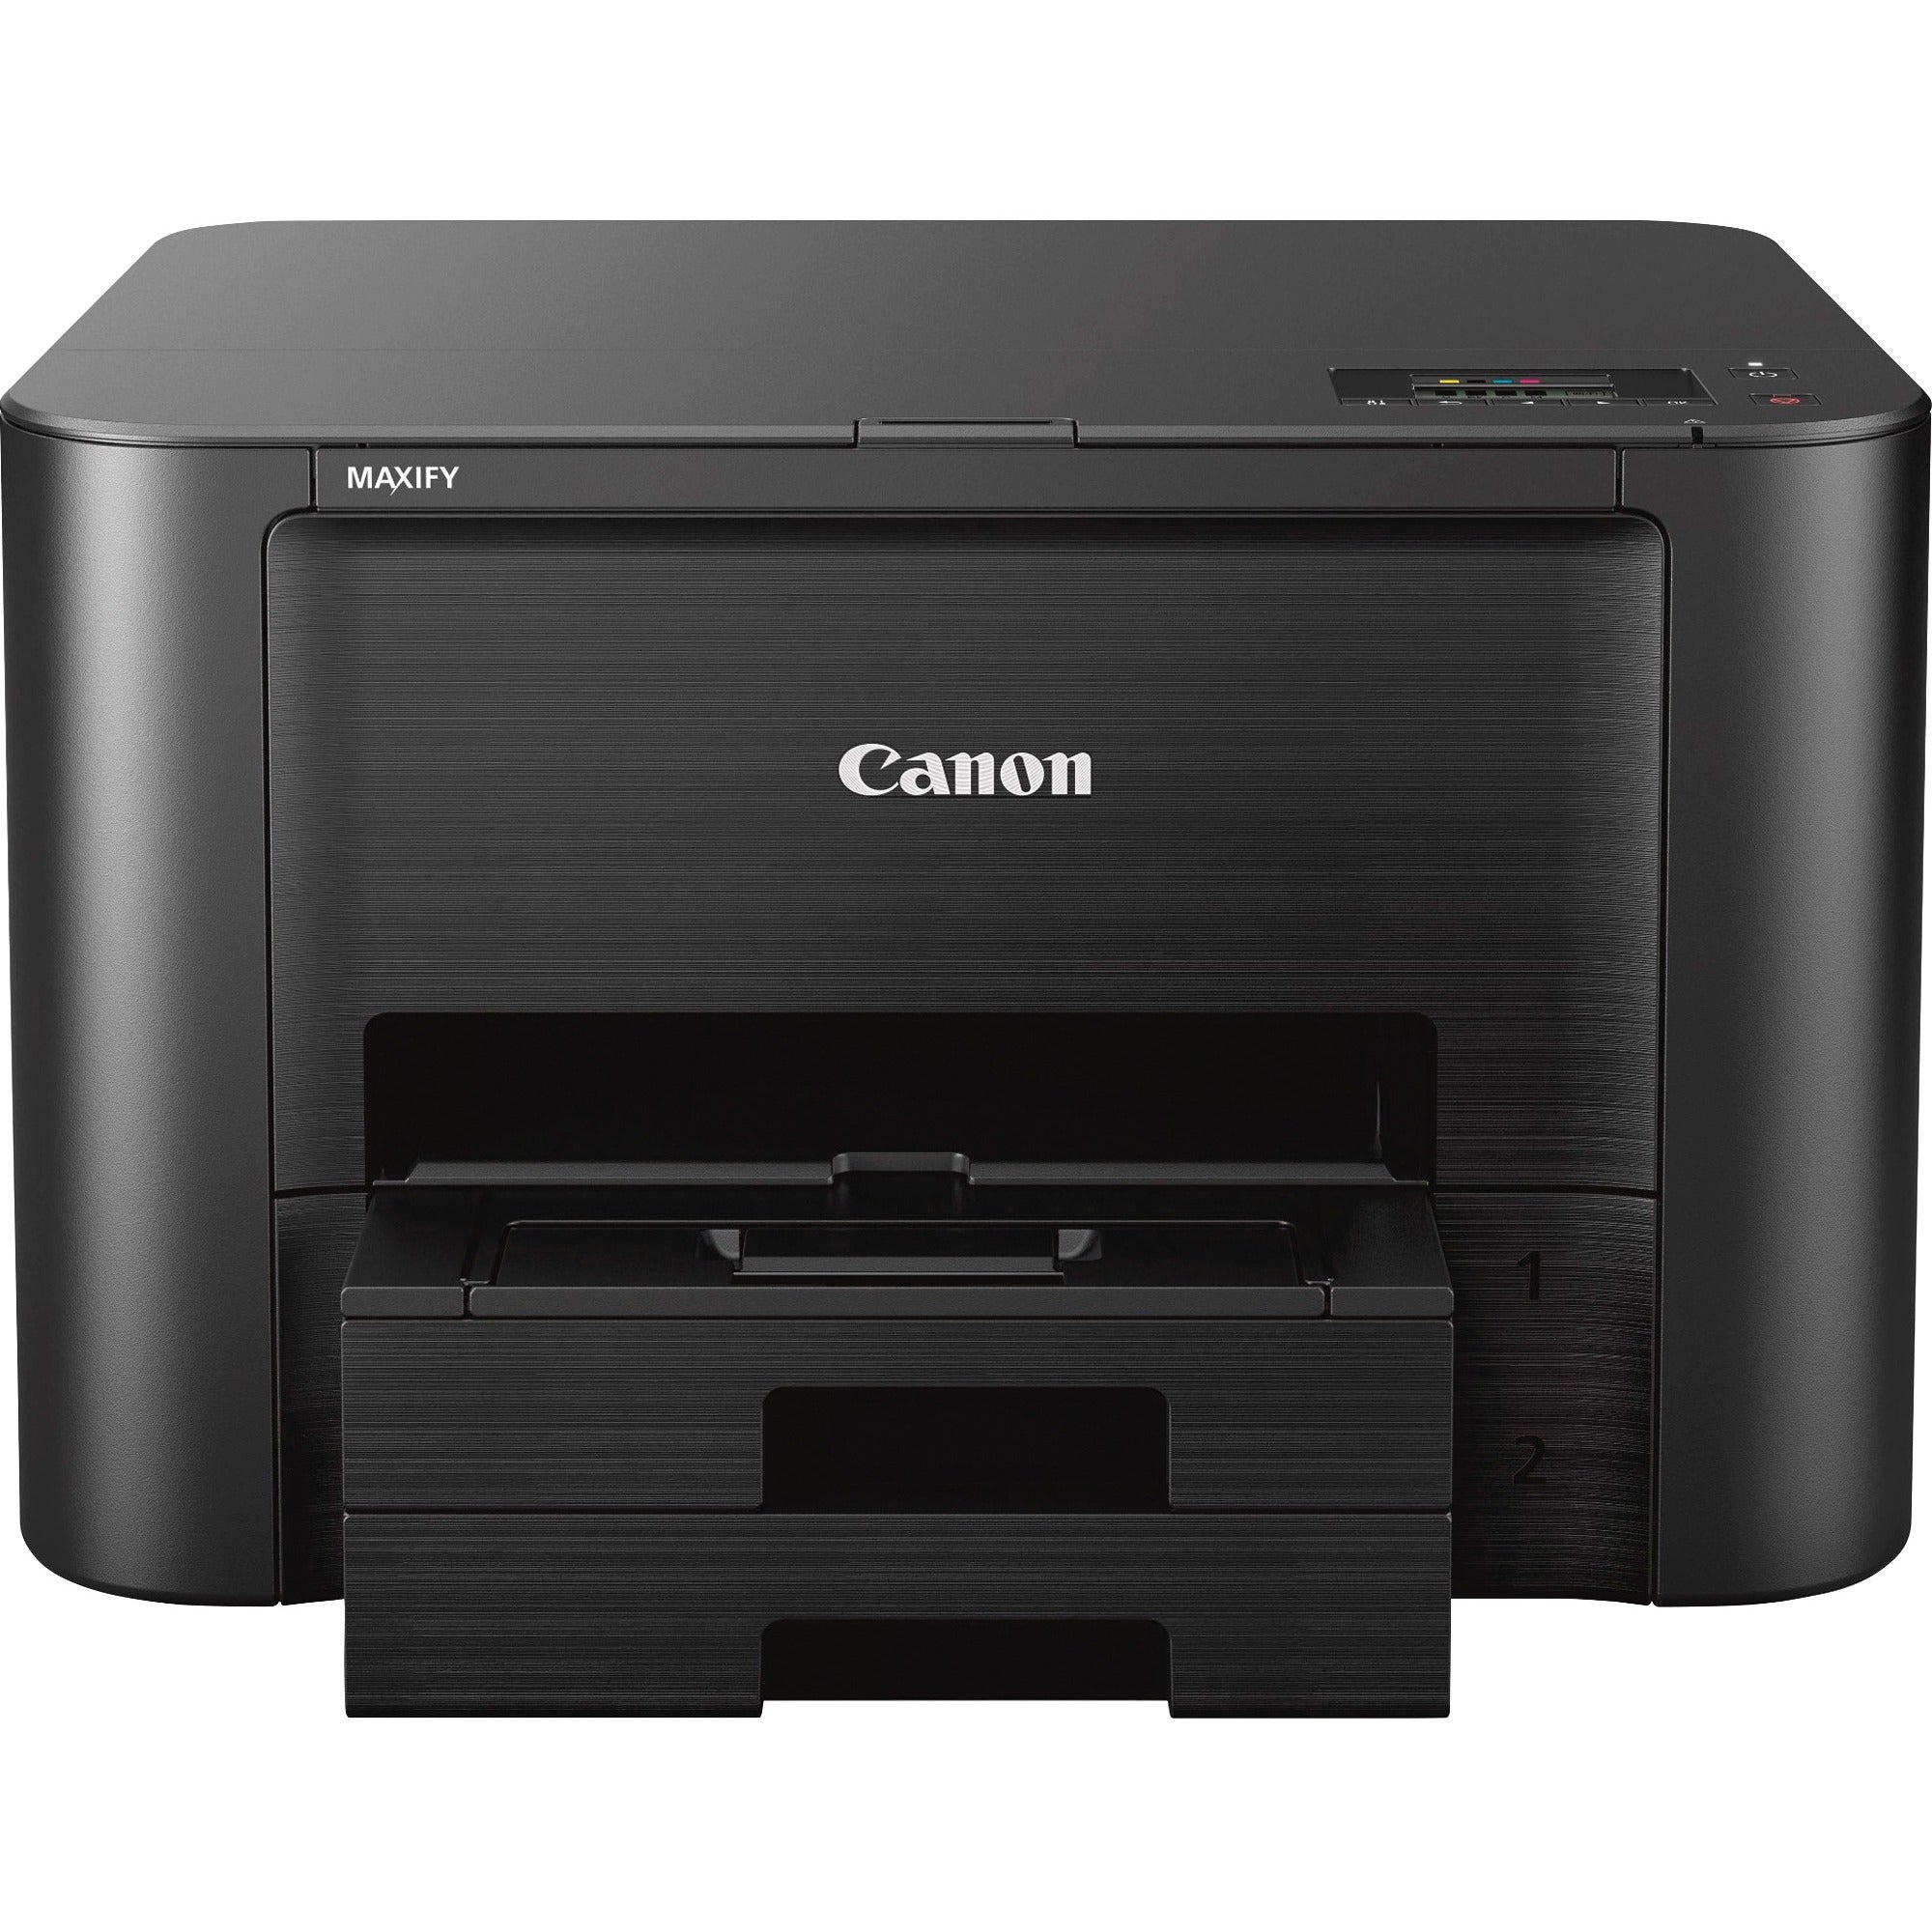 Canon MAXIFY iB4120 Desktop Inkjet Printer - Color - 600 x 1200 dpi Print - Automatic Duplex Print - 500 Sheets Input - Ethernet - Wireless LAN - Mopria - 30000 Pages Duty Cycle - Plain Paper Print - Ethernet - USB - 1